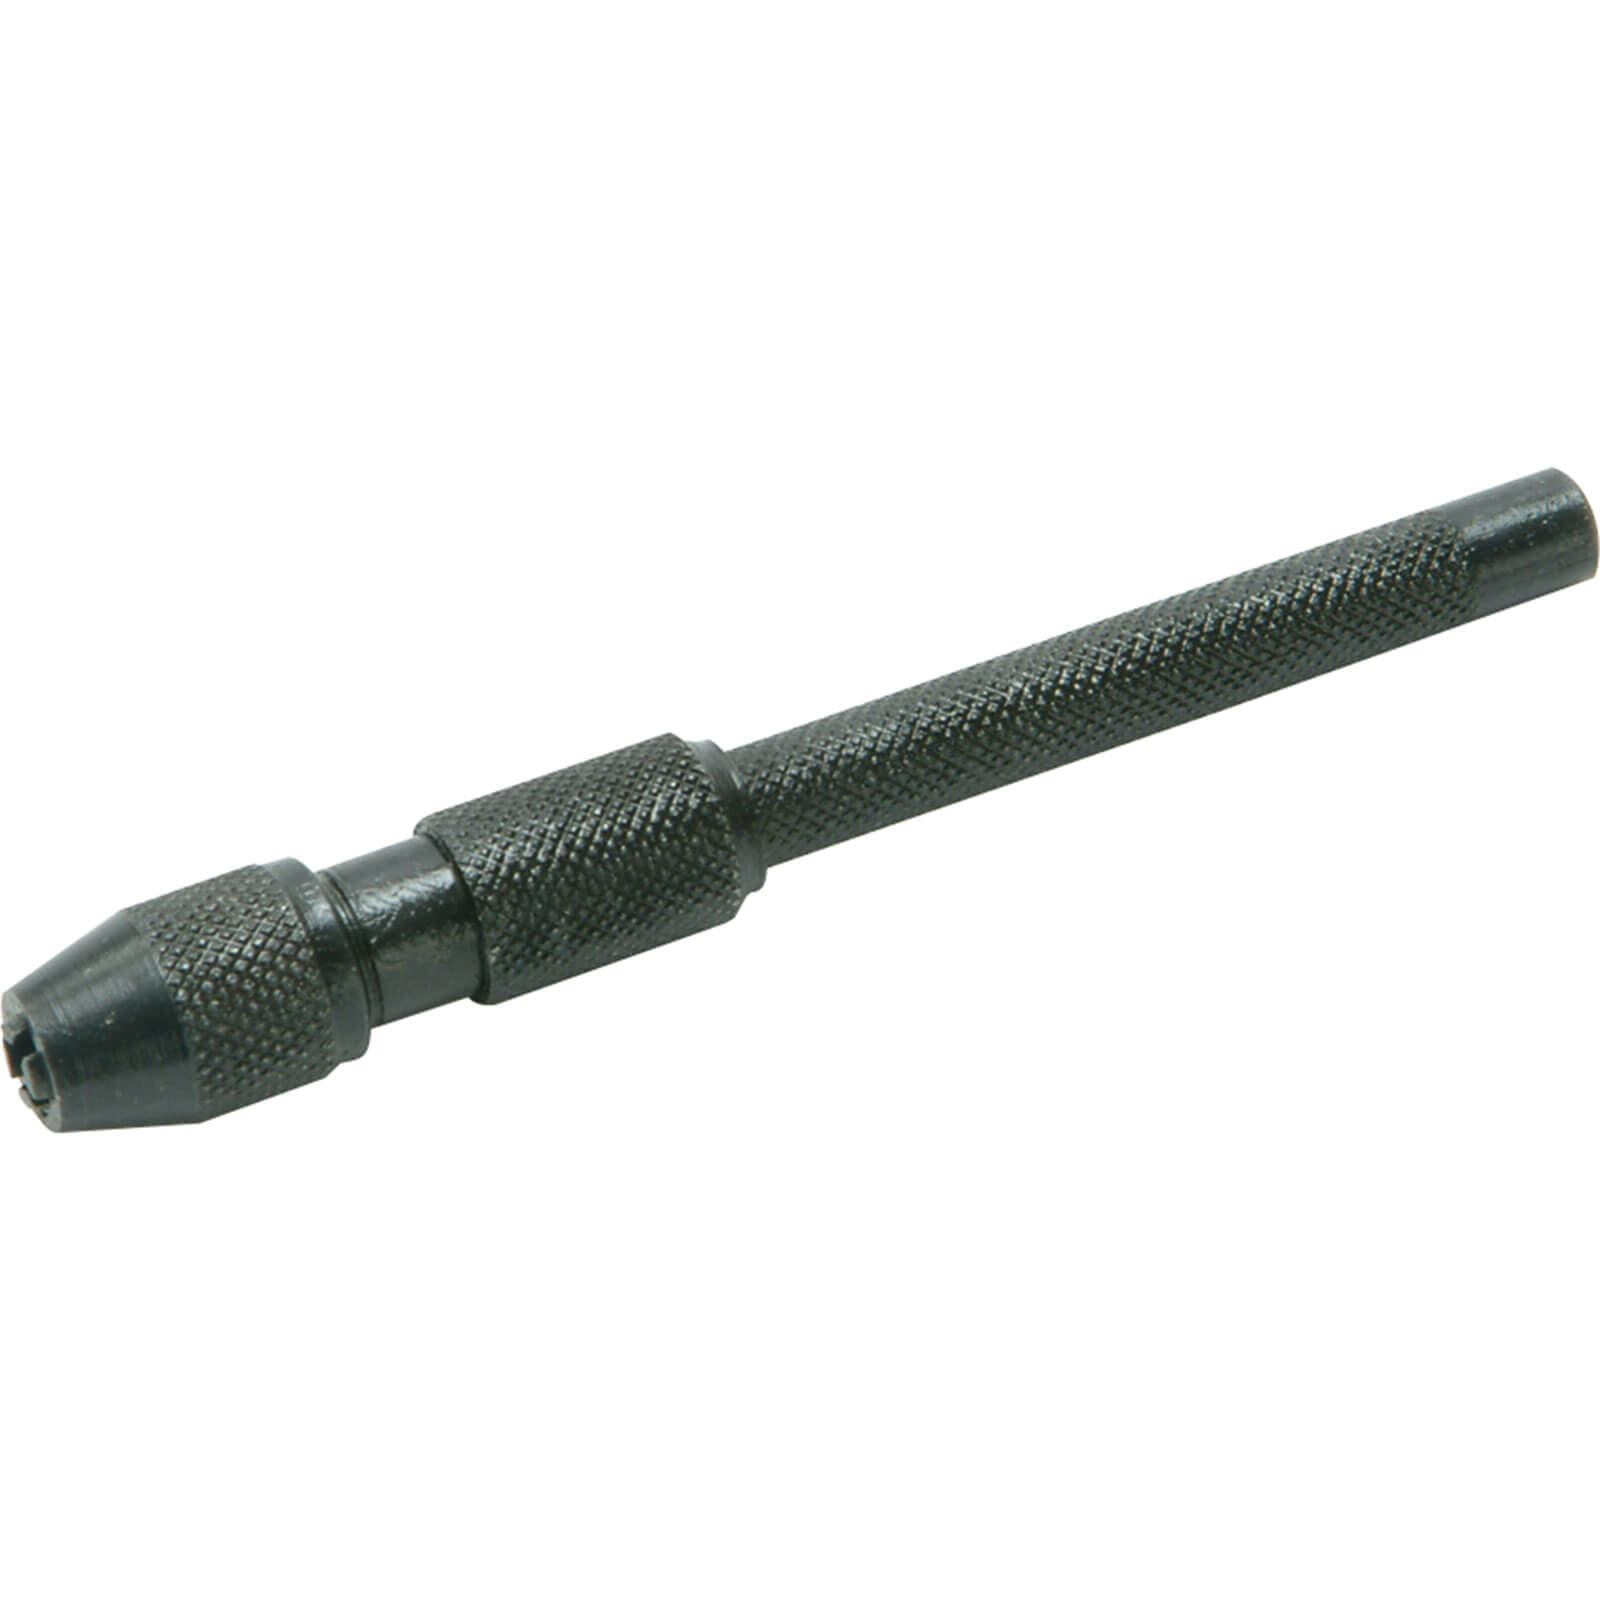 Faithfull Pin Vice - Size 3 1.5 - 3mm Cap